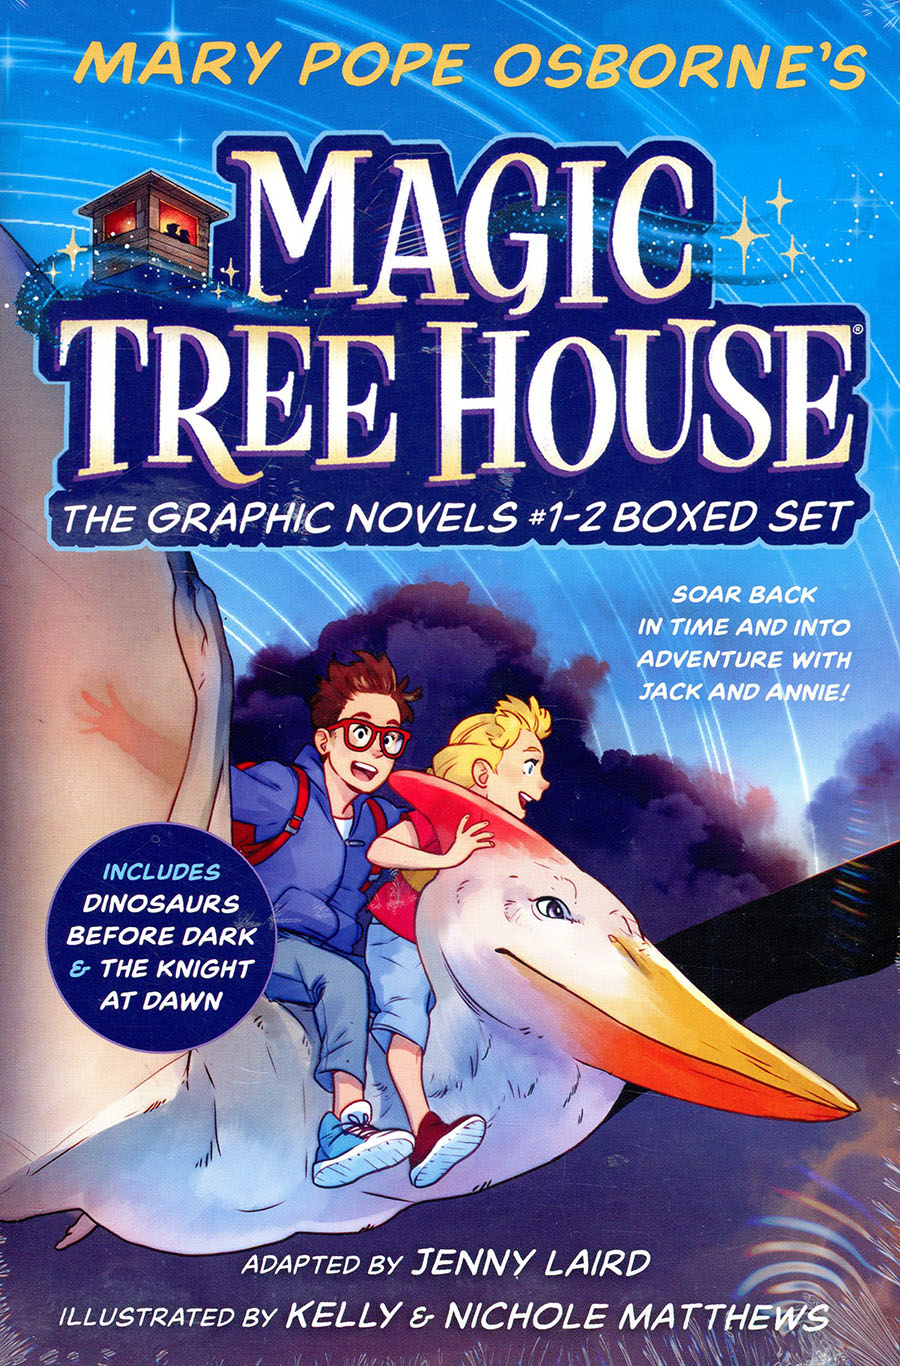 Magic Tree House The Graphic Novel Vols 1 & 2 Box Set